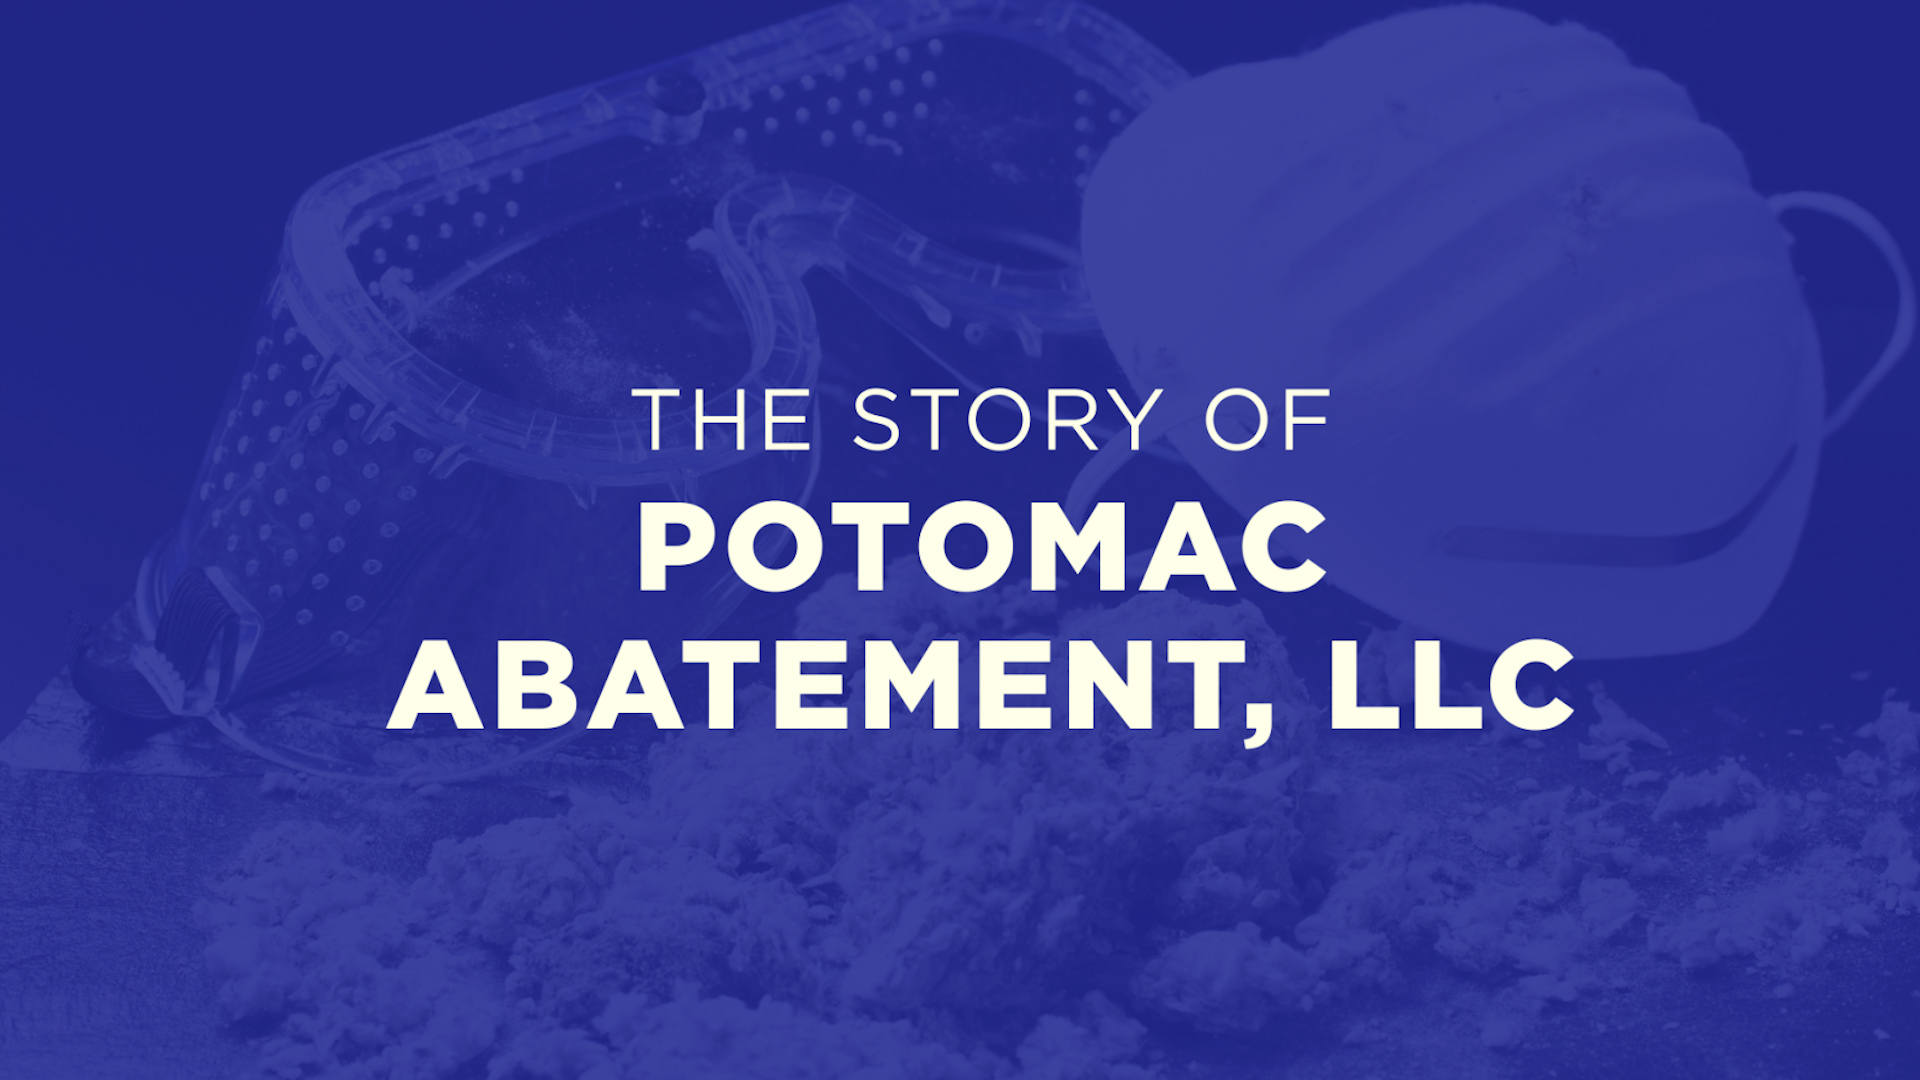 The Story of Potomac Abatement, LLC